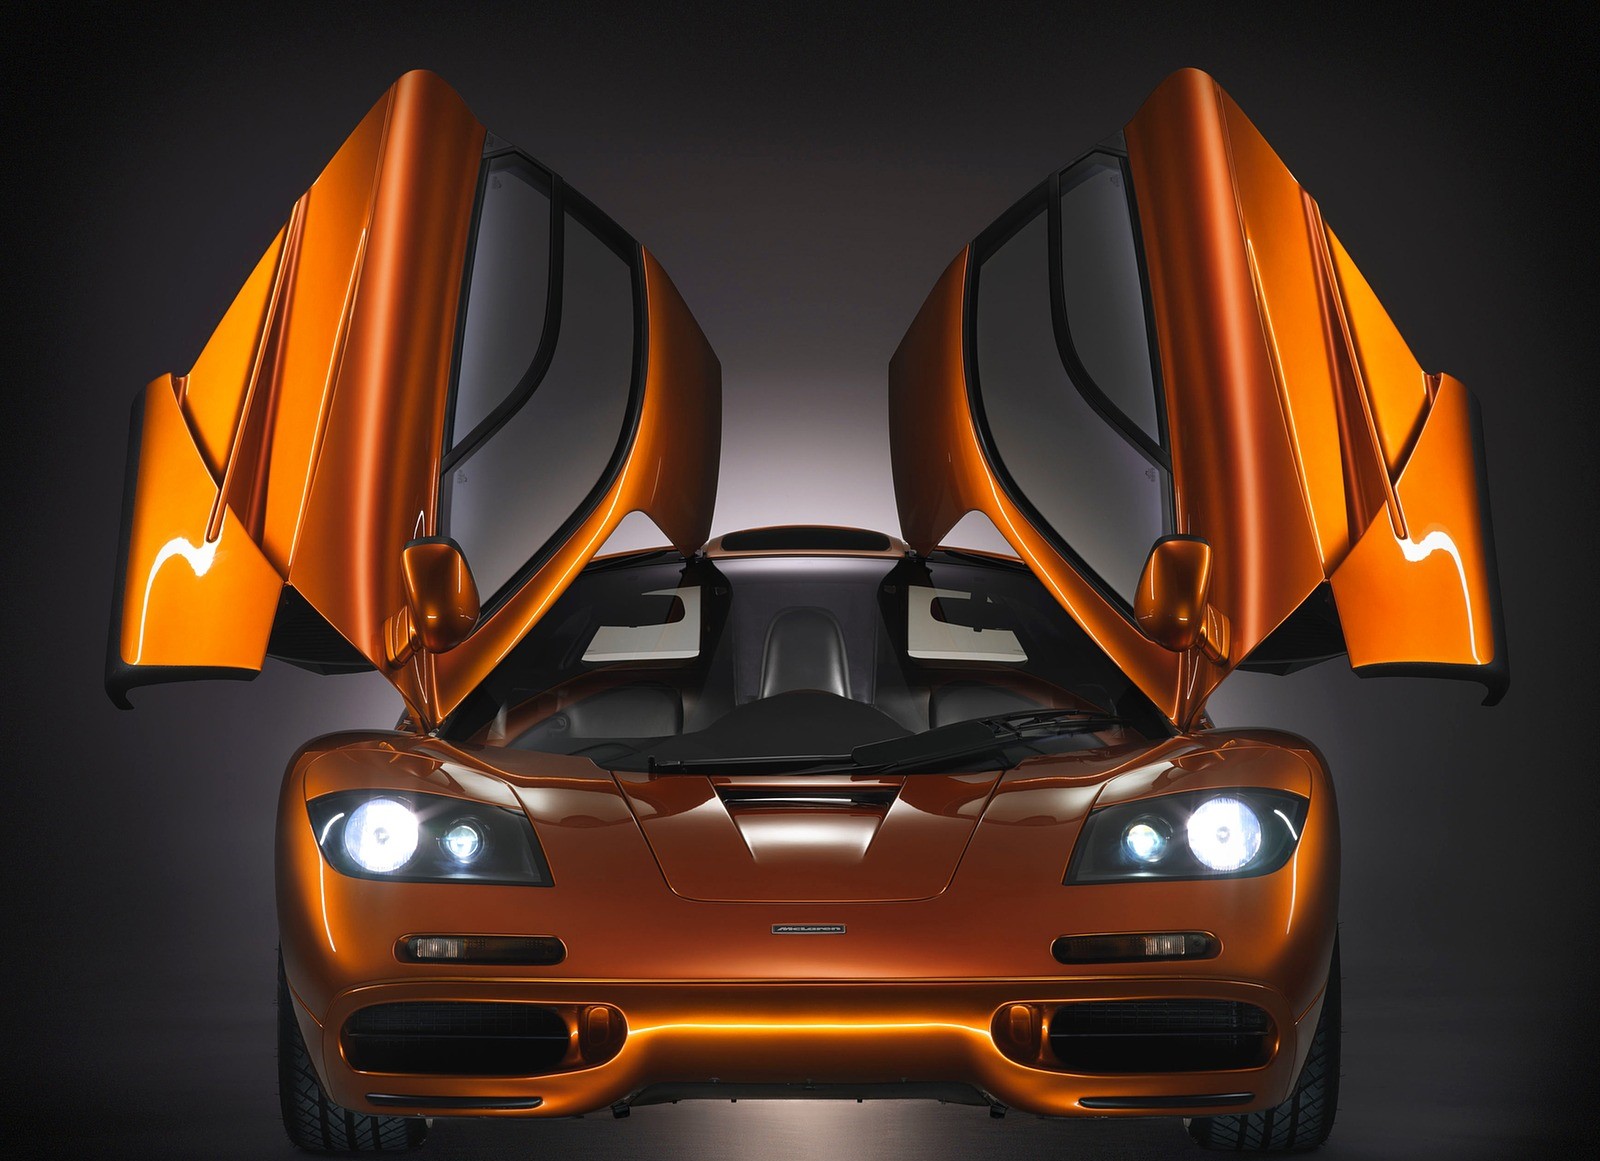 McLaren F1 with its butterfly doors